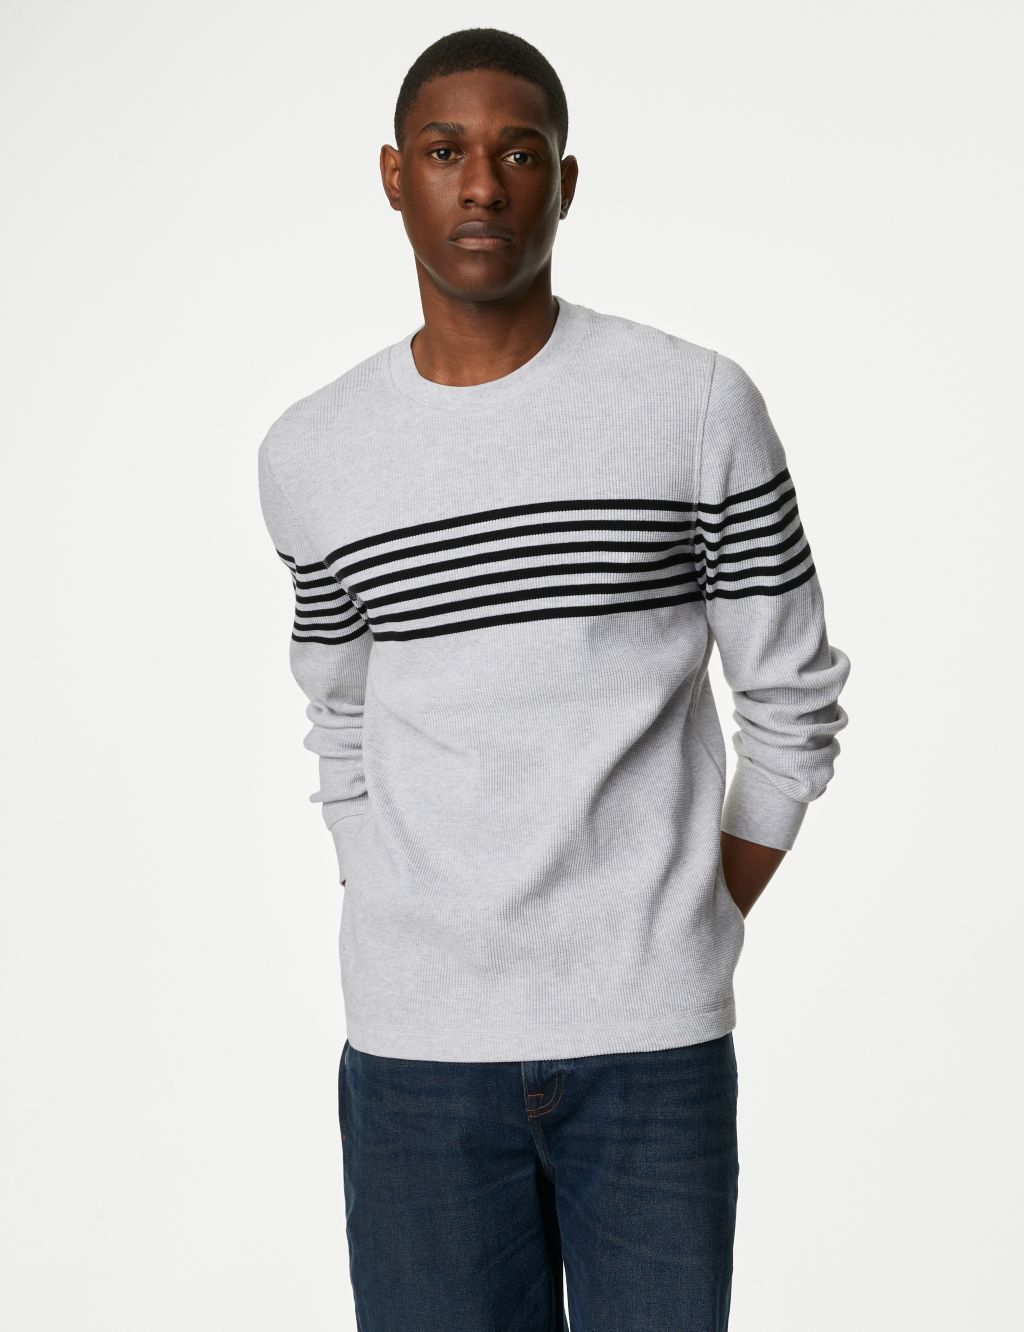 Pure Cotton Striped Waffle Sweatshirt